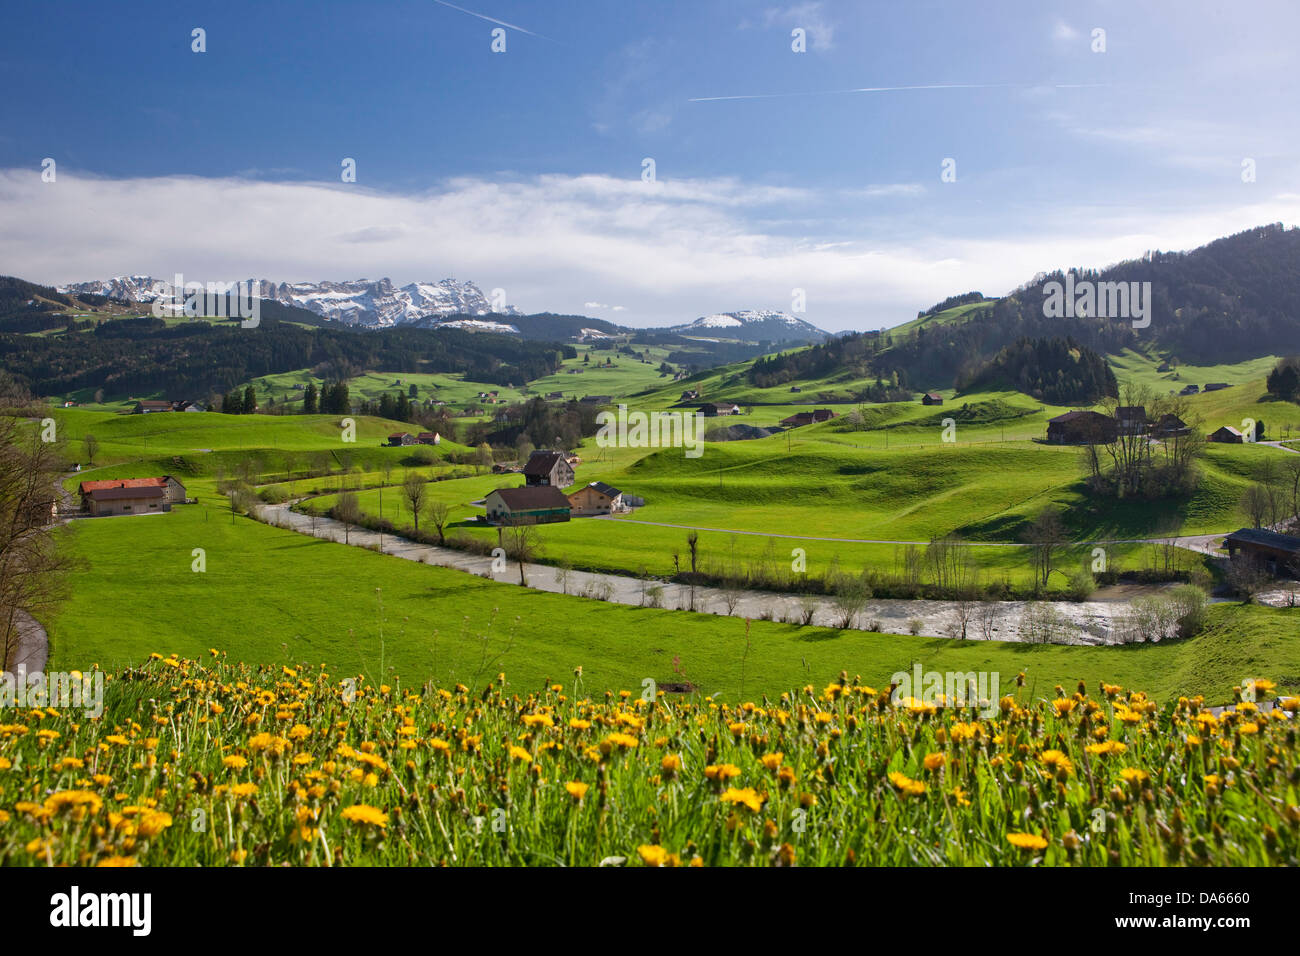 Man-made, Cultural, landscape, Appenzell area, Säntisblick, flower, flowers, spring, scenery, landscape, agriculture, Alpstein, Stock Photo